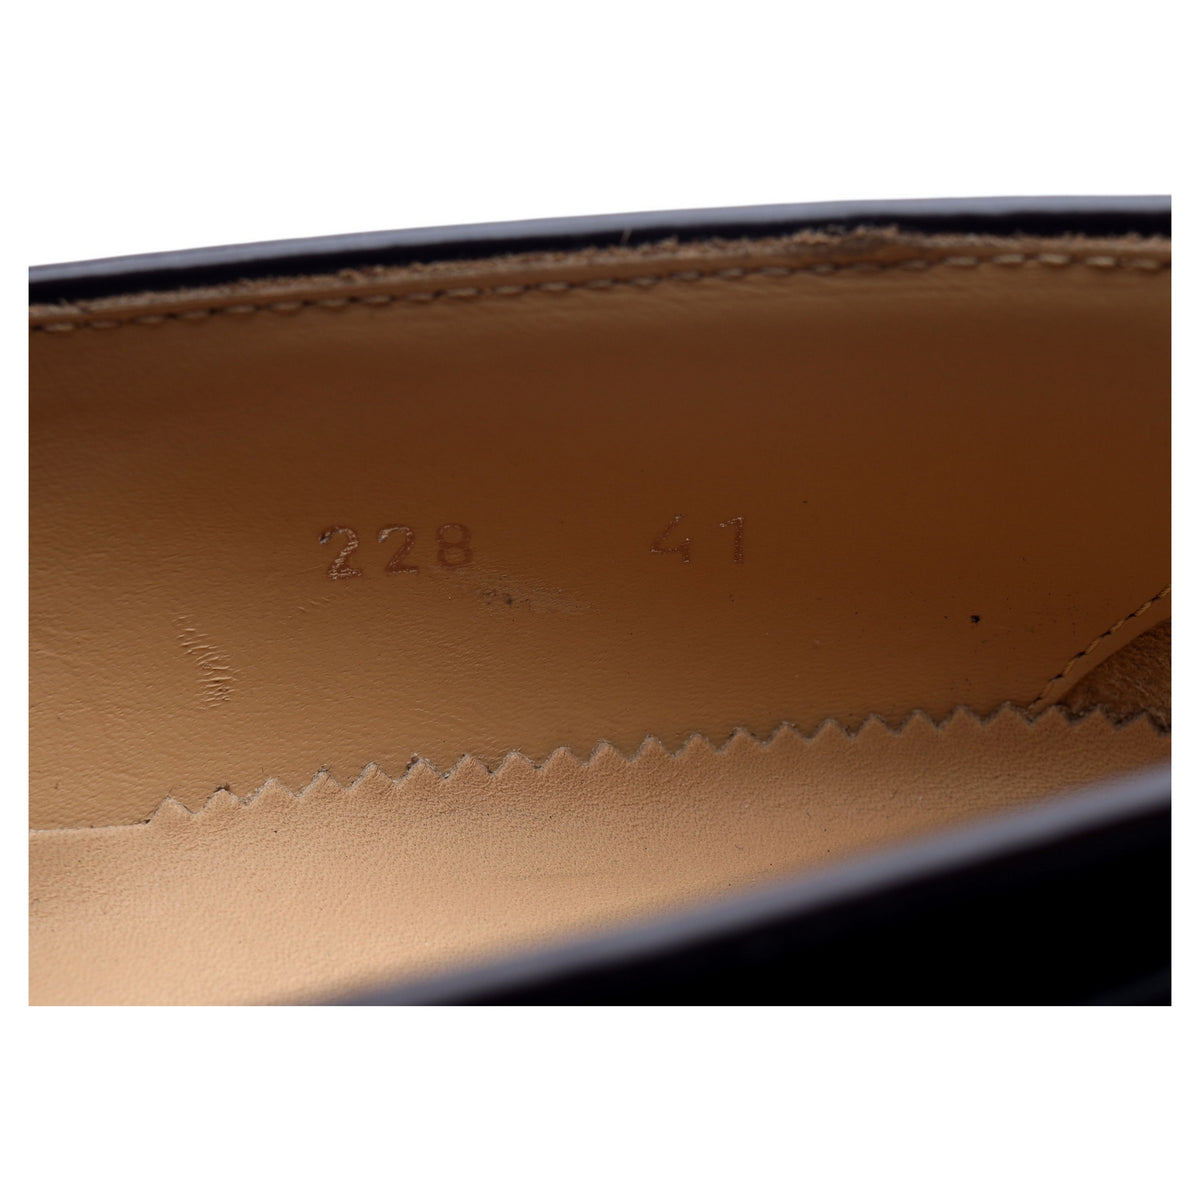 Burgundy Leather Tassel Loafers UK 7 EU 41